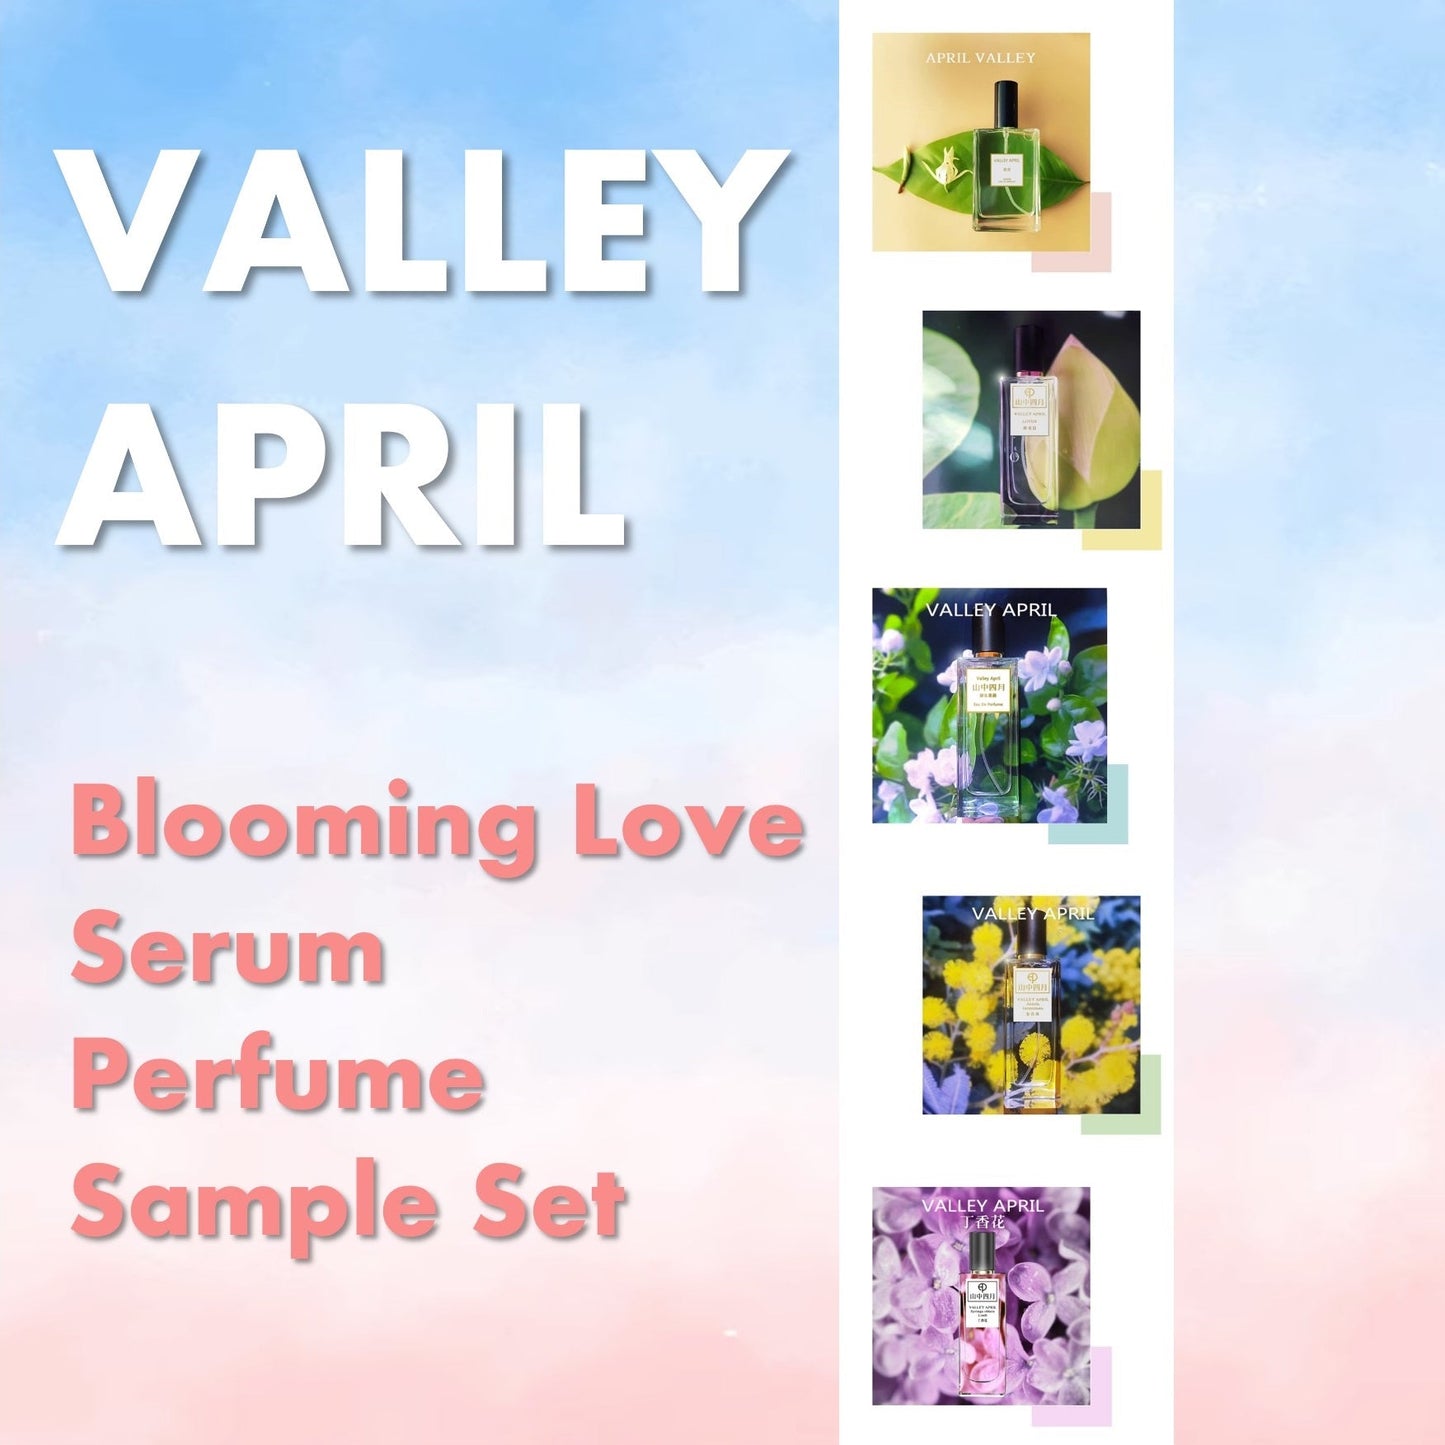 Blooming Love Serum Perfume Sample Set